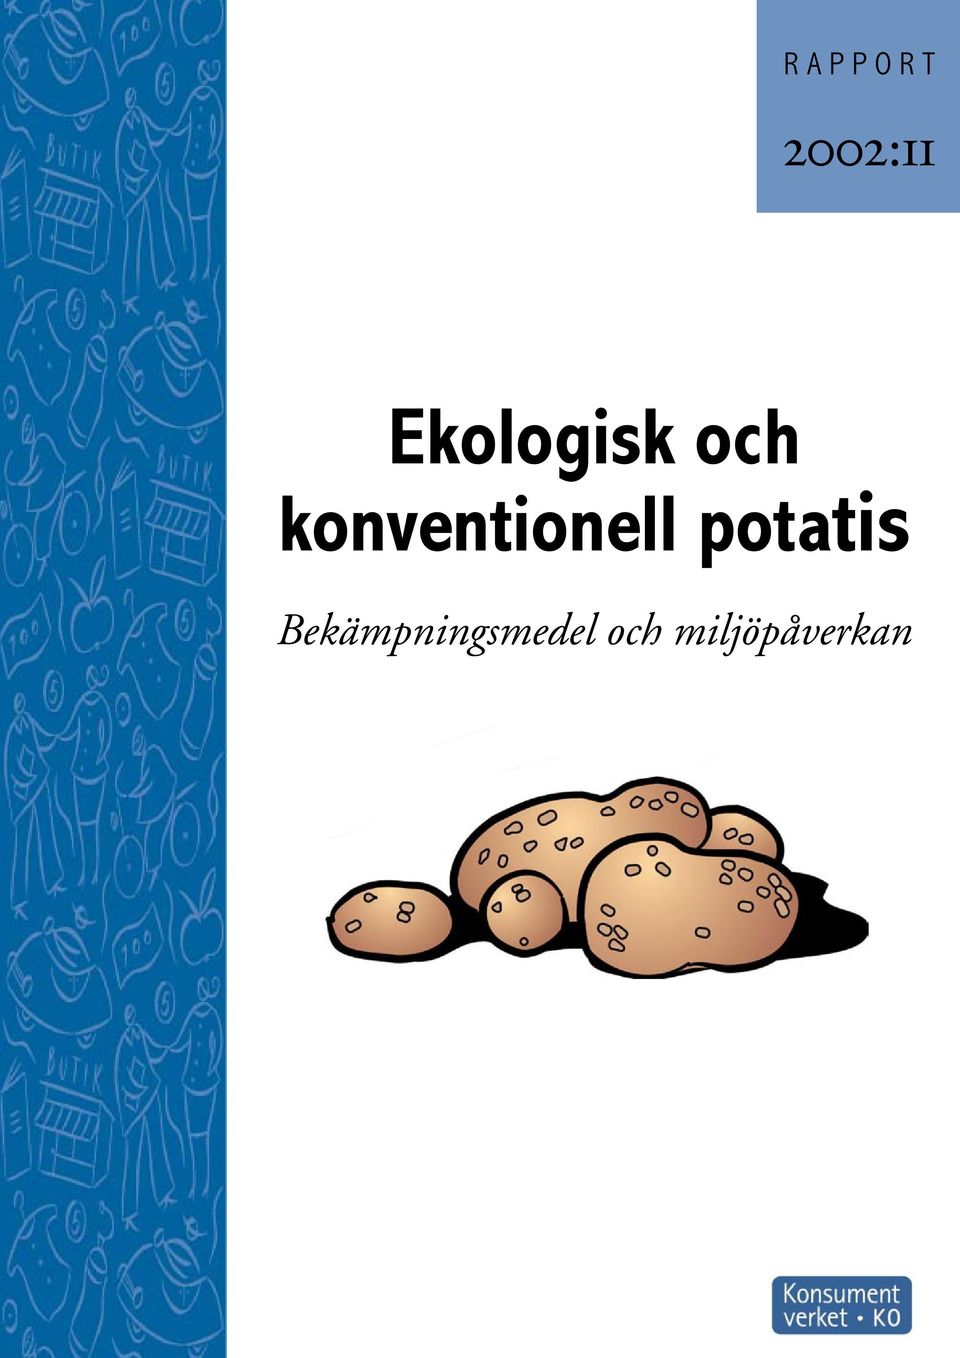 konventionell potatis